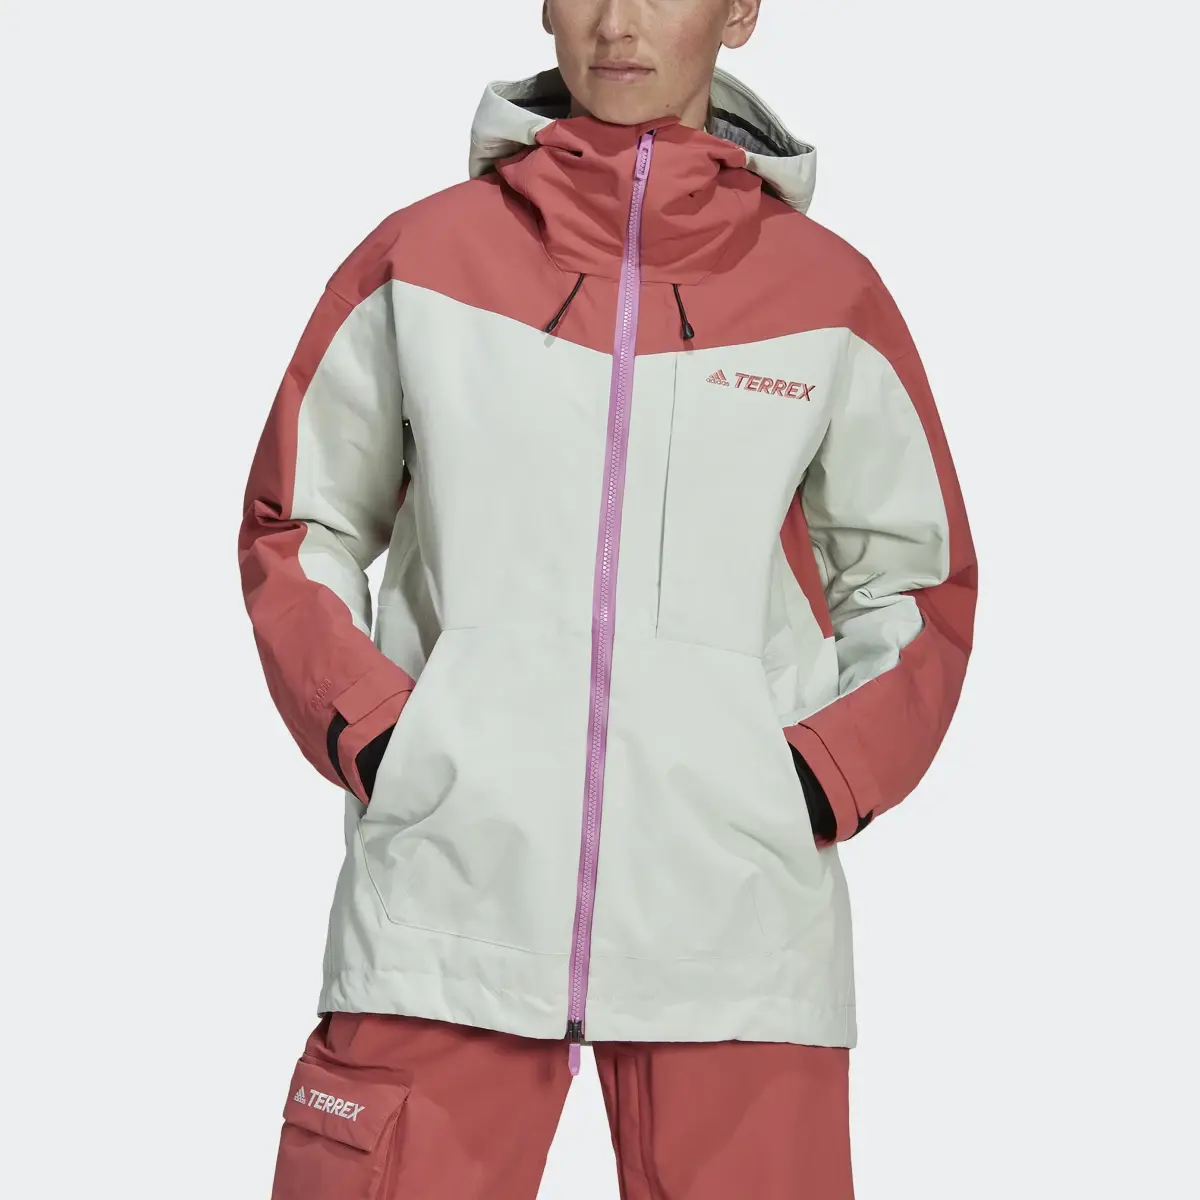 Adidas TERREX 3-Layer Post-Consumer Nylon Snow Jacket. 1